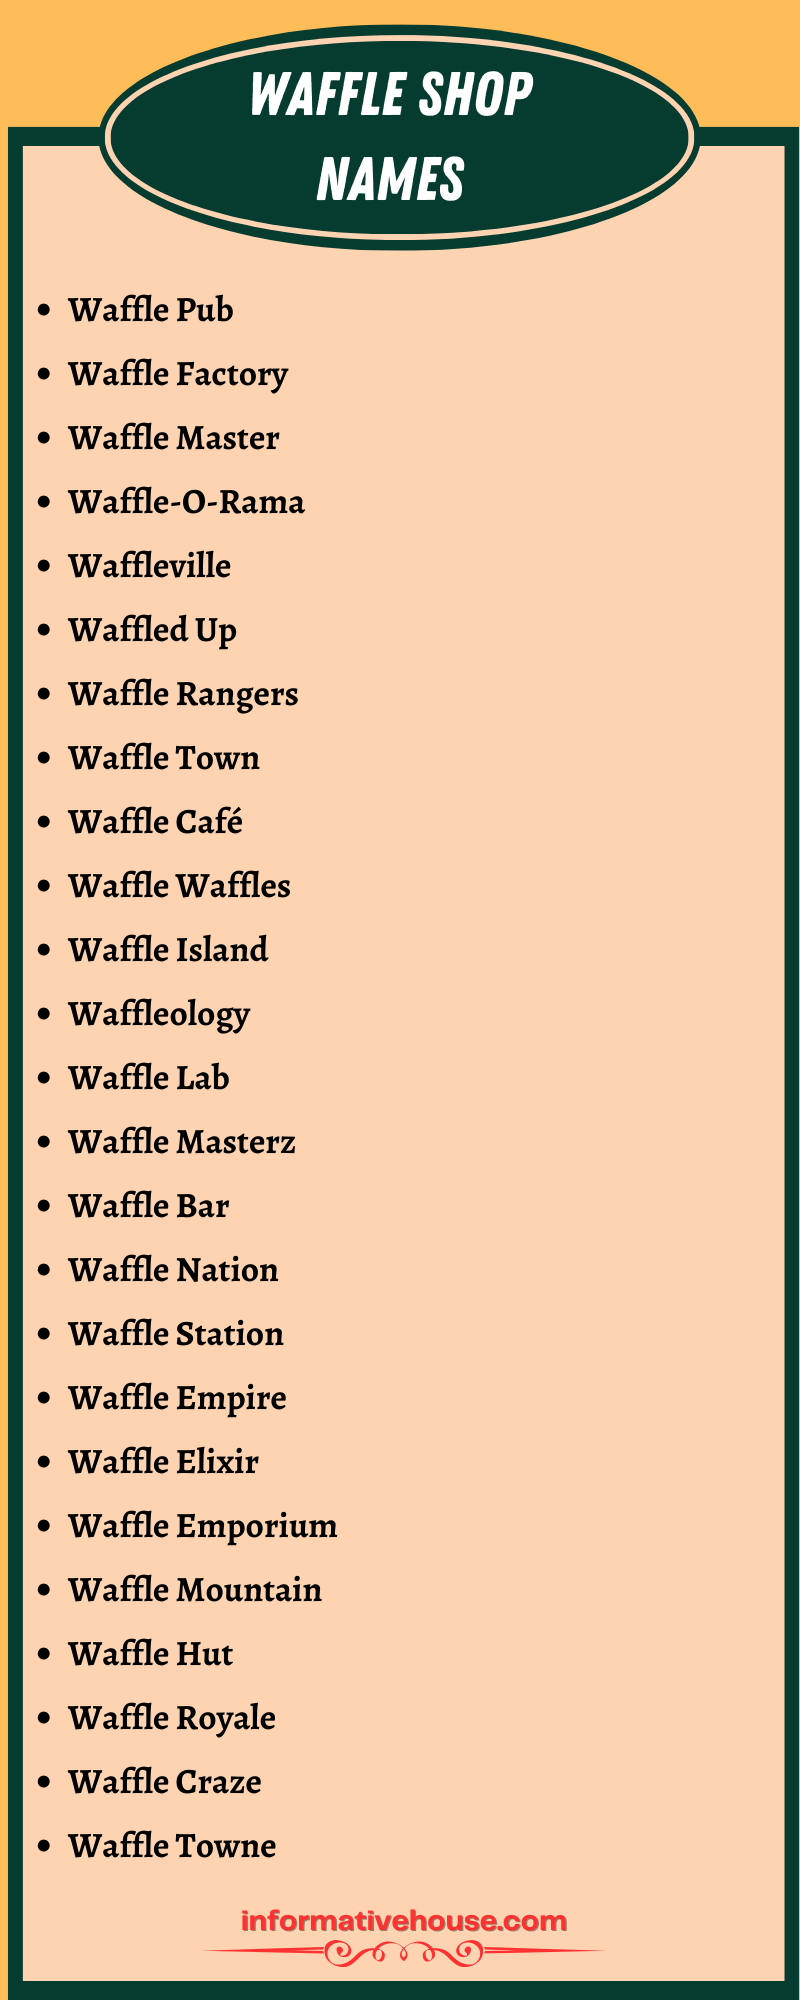 Waffle Shop Names